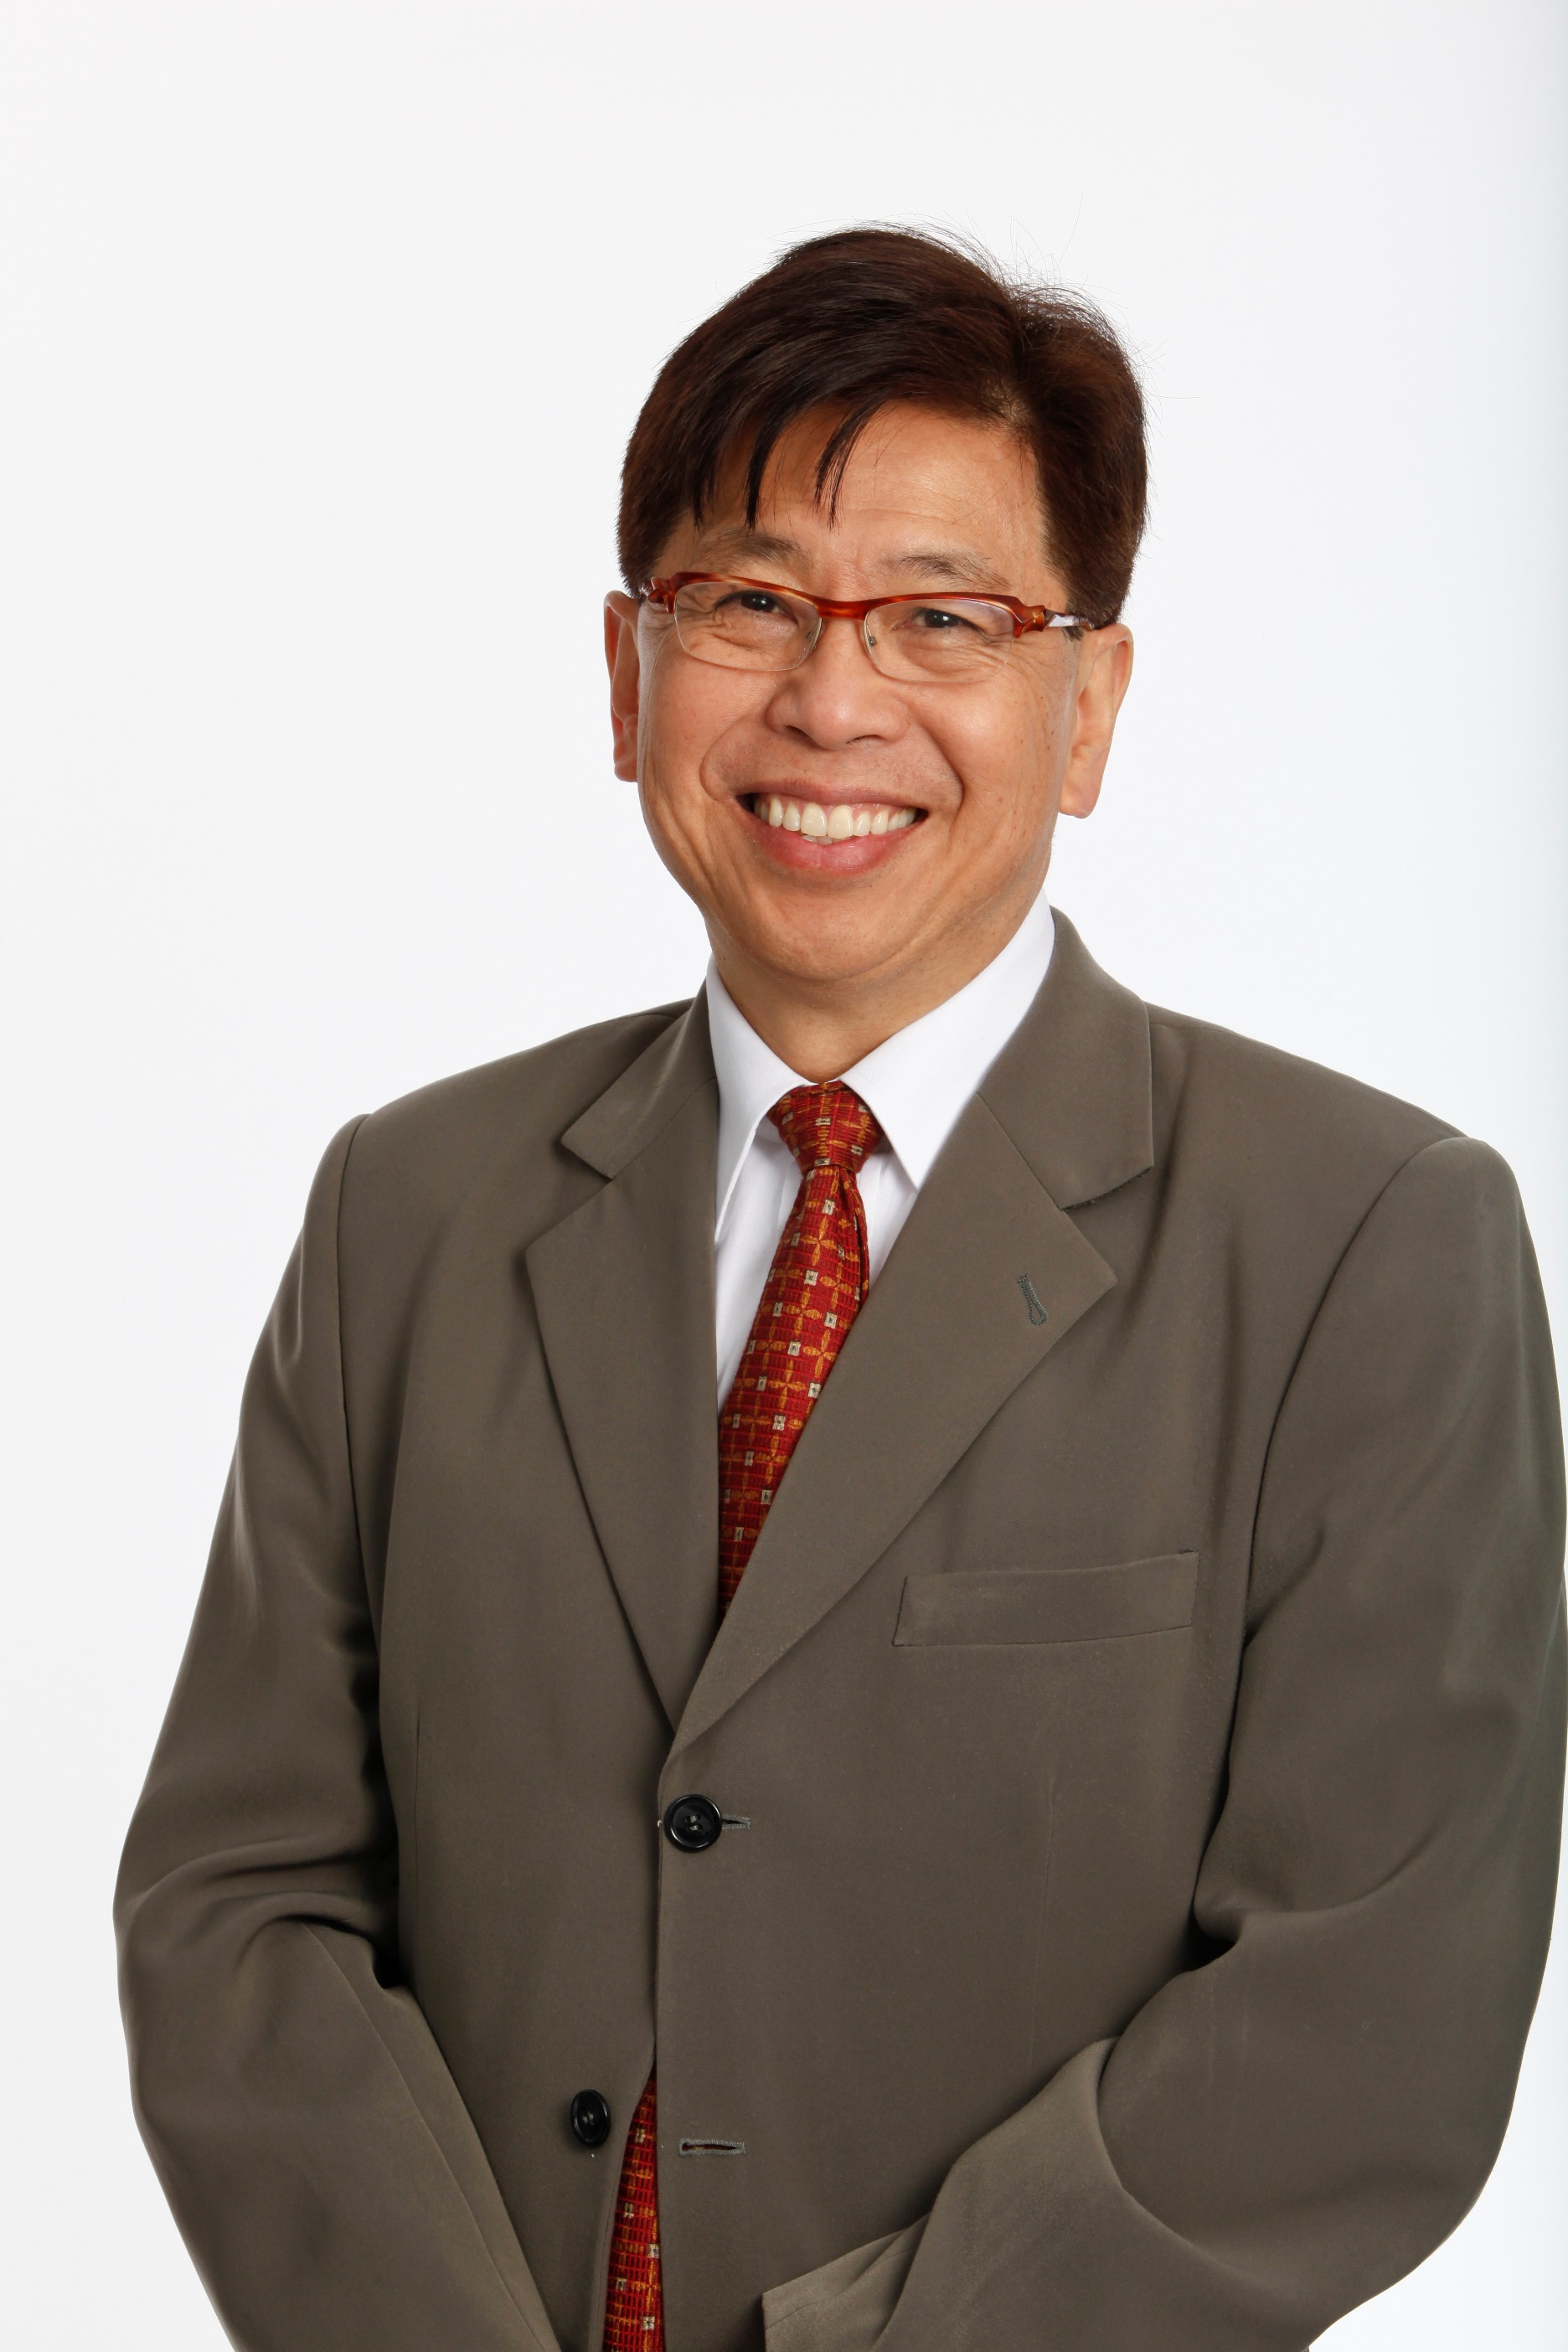 Dr. Edison Liu, president and CEO of The Jackson Laboratory